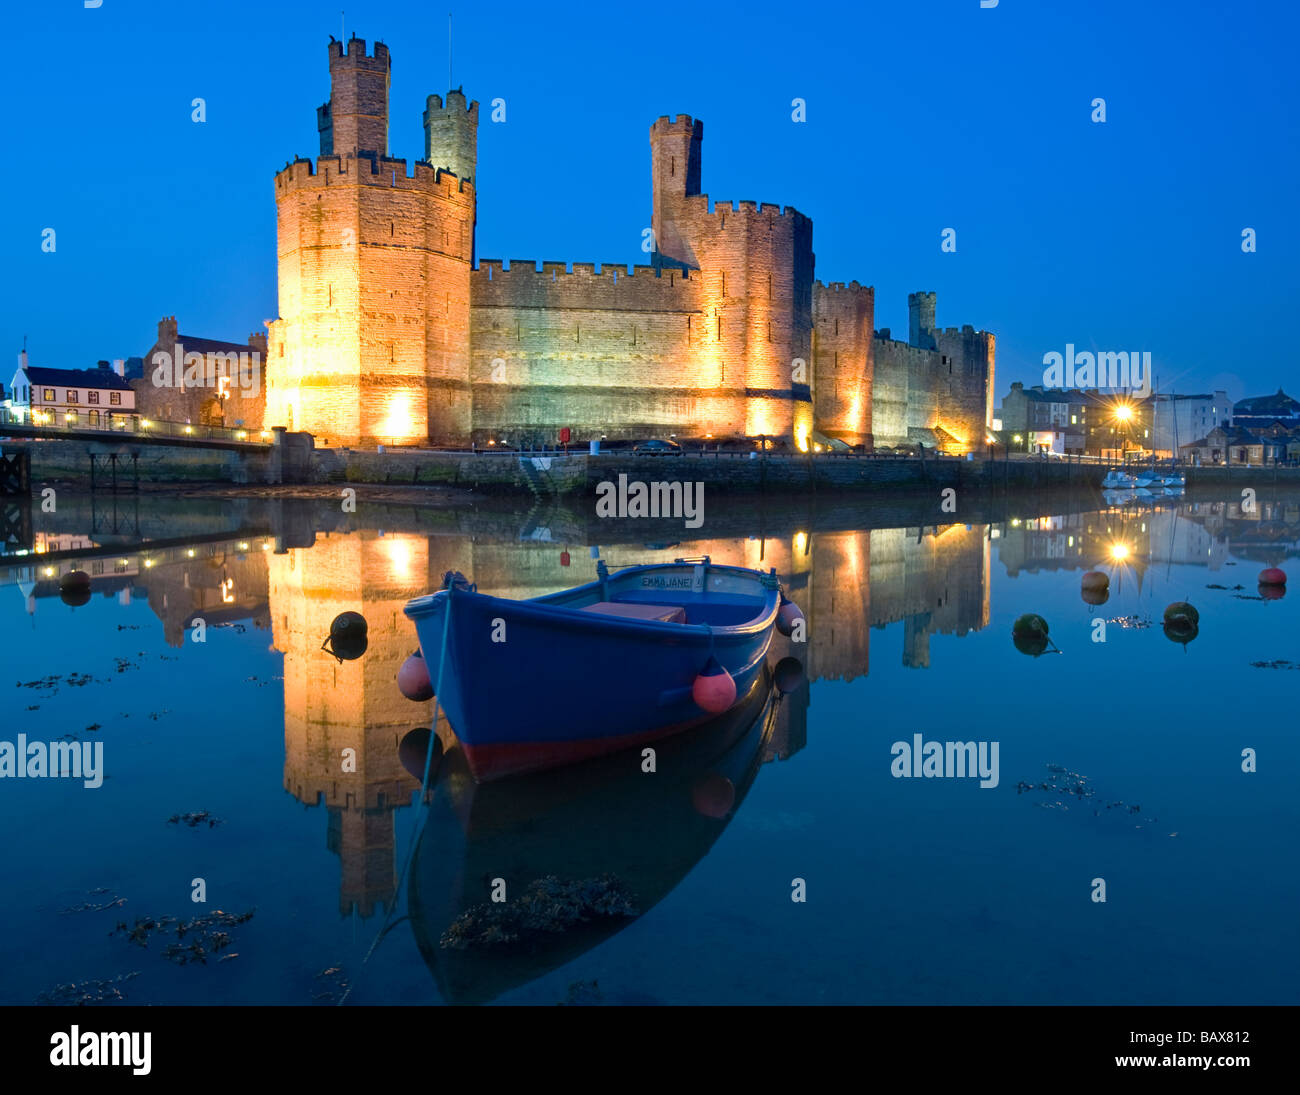 Caernarfon Castle and Estuary at Night, Caernarfon, Gwynedd, North Wales, UK Stock Photo